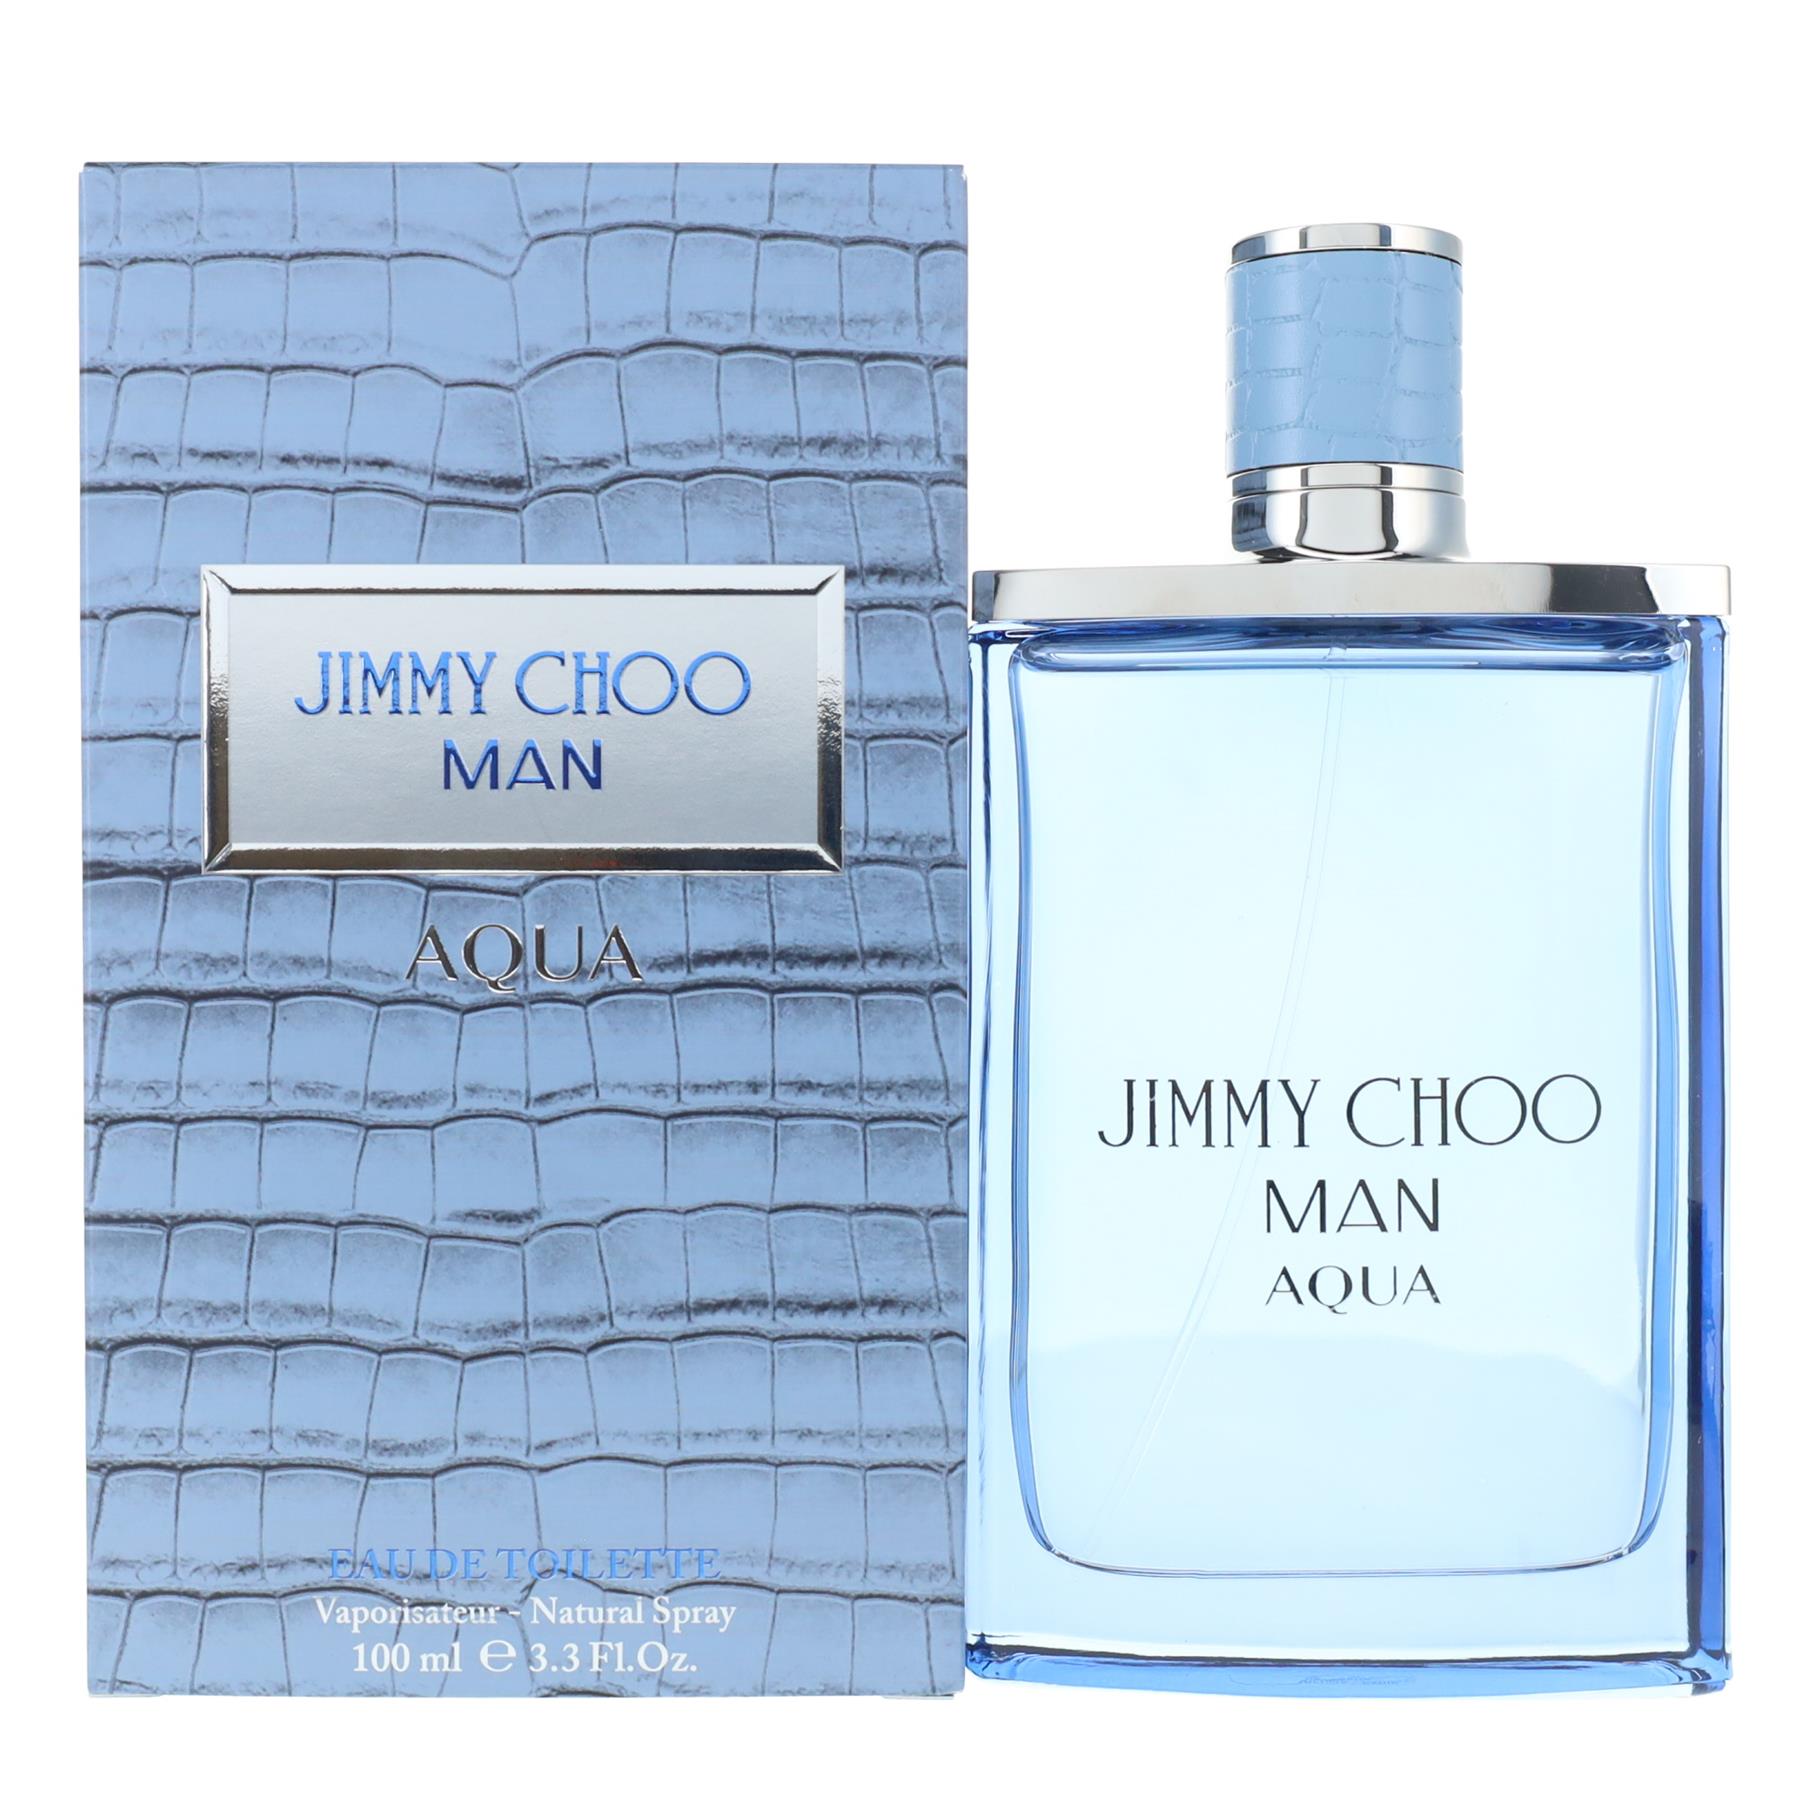 Jimmy Choo Man Aqua 100ml Eau de Toilette Spray for Him from Perfume Plus Direct